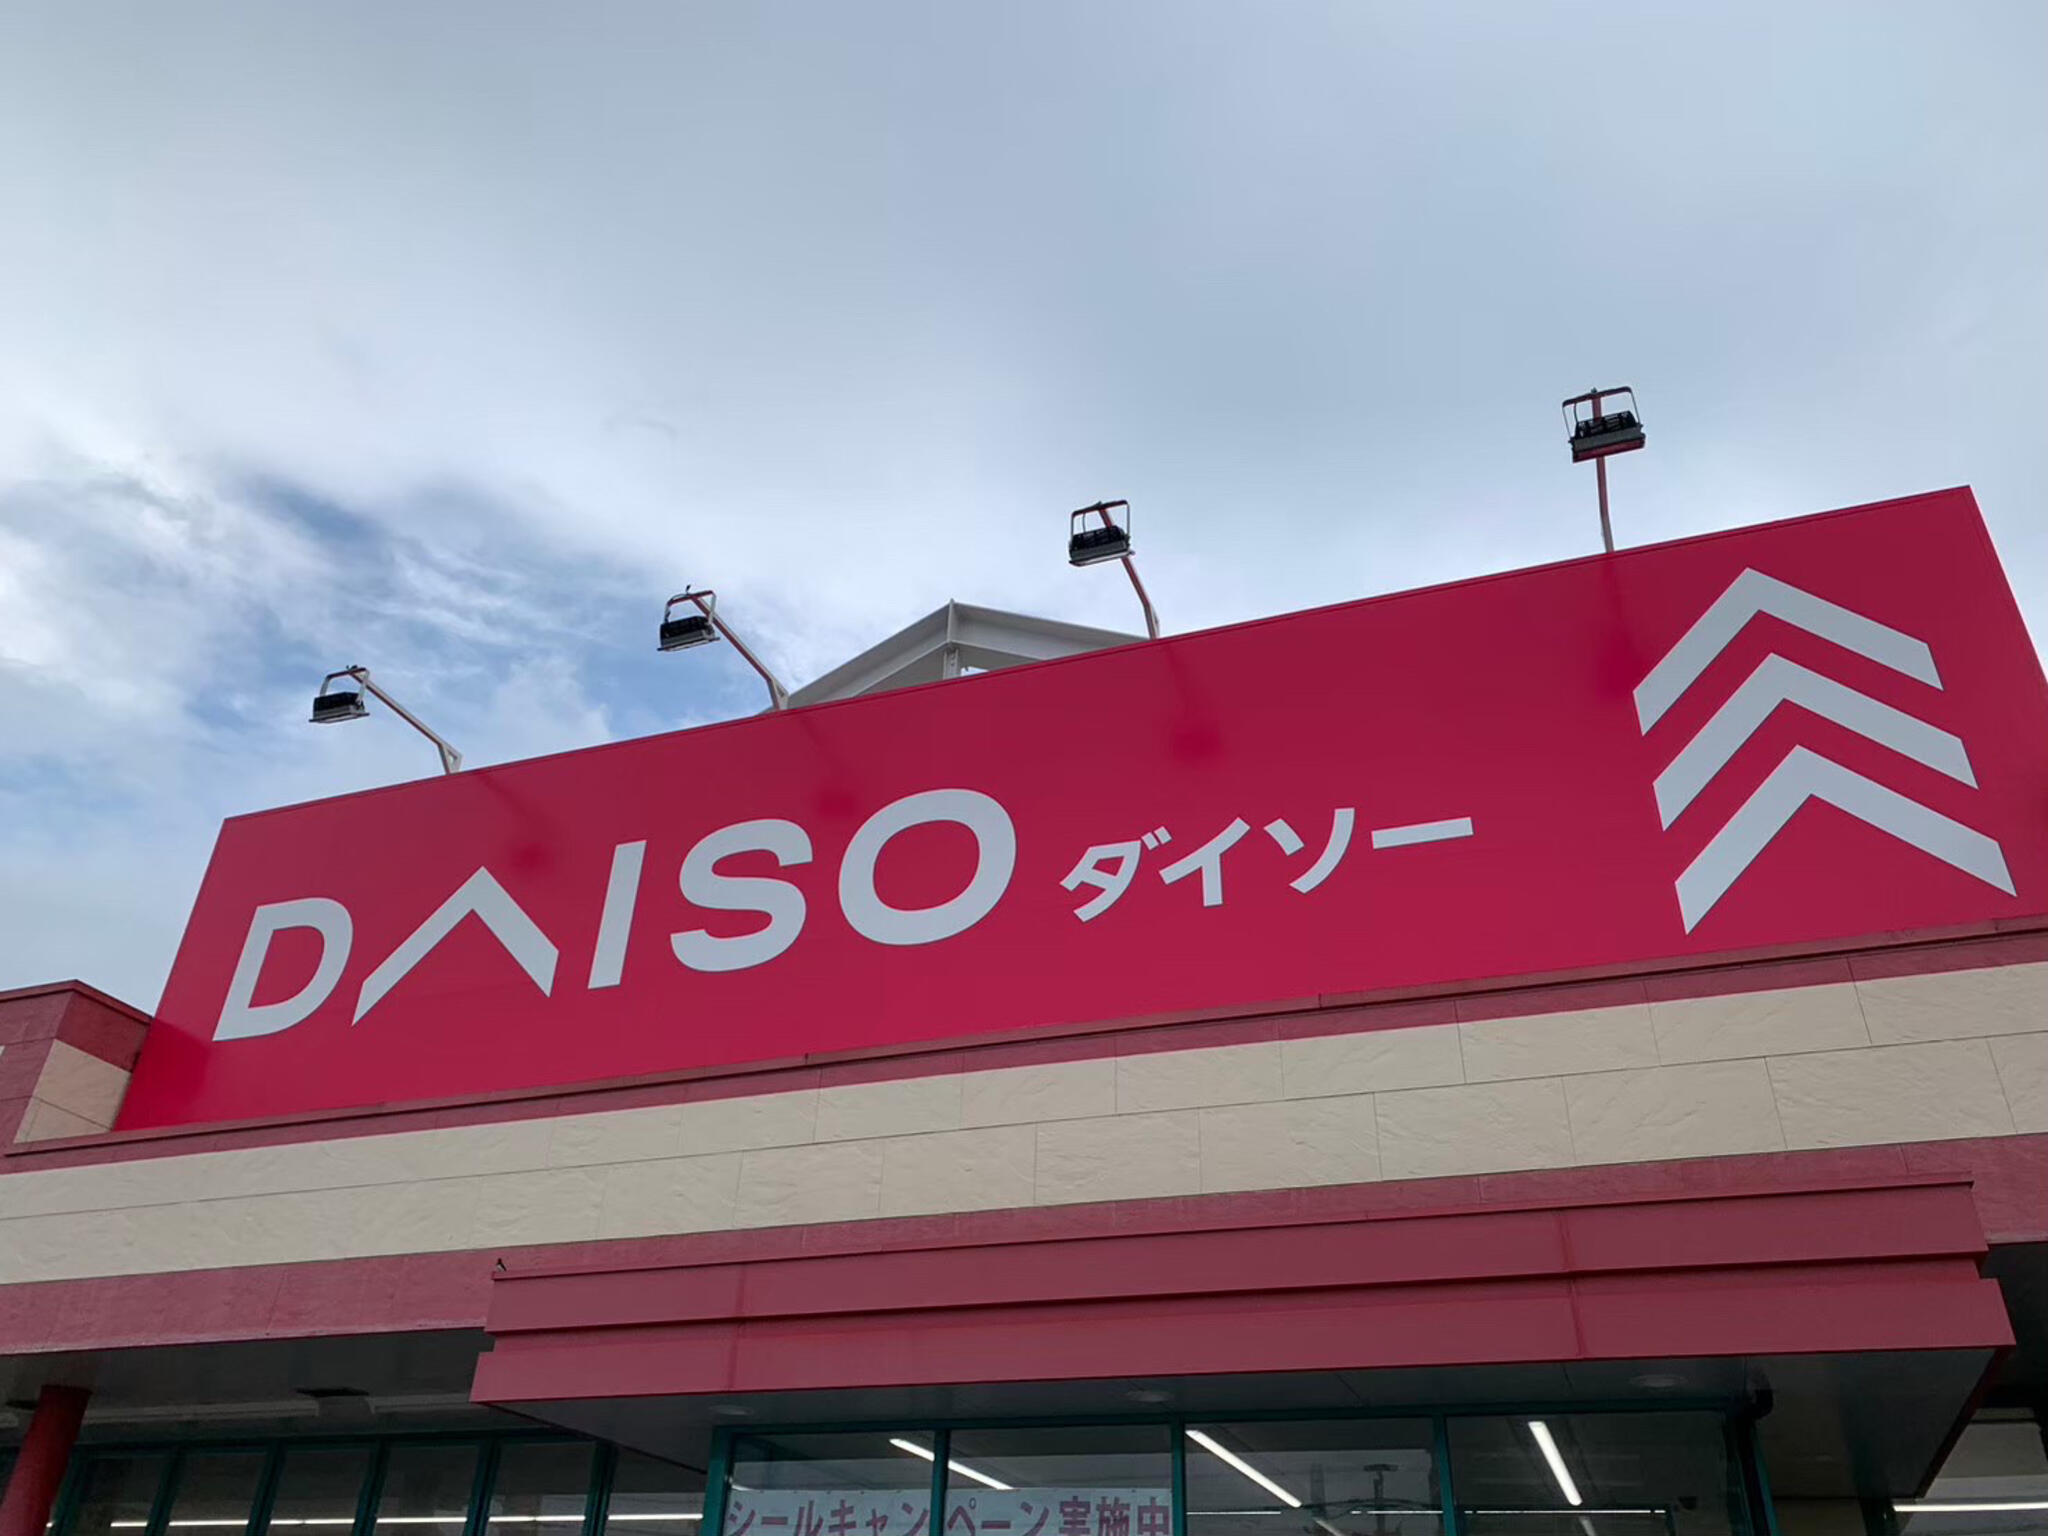 DAISO 福岡大佐野店の代表写真3